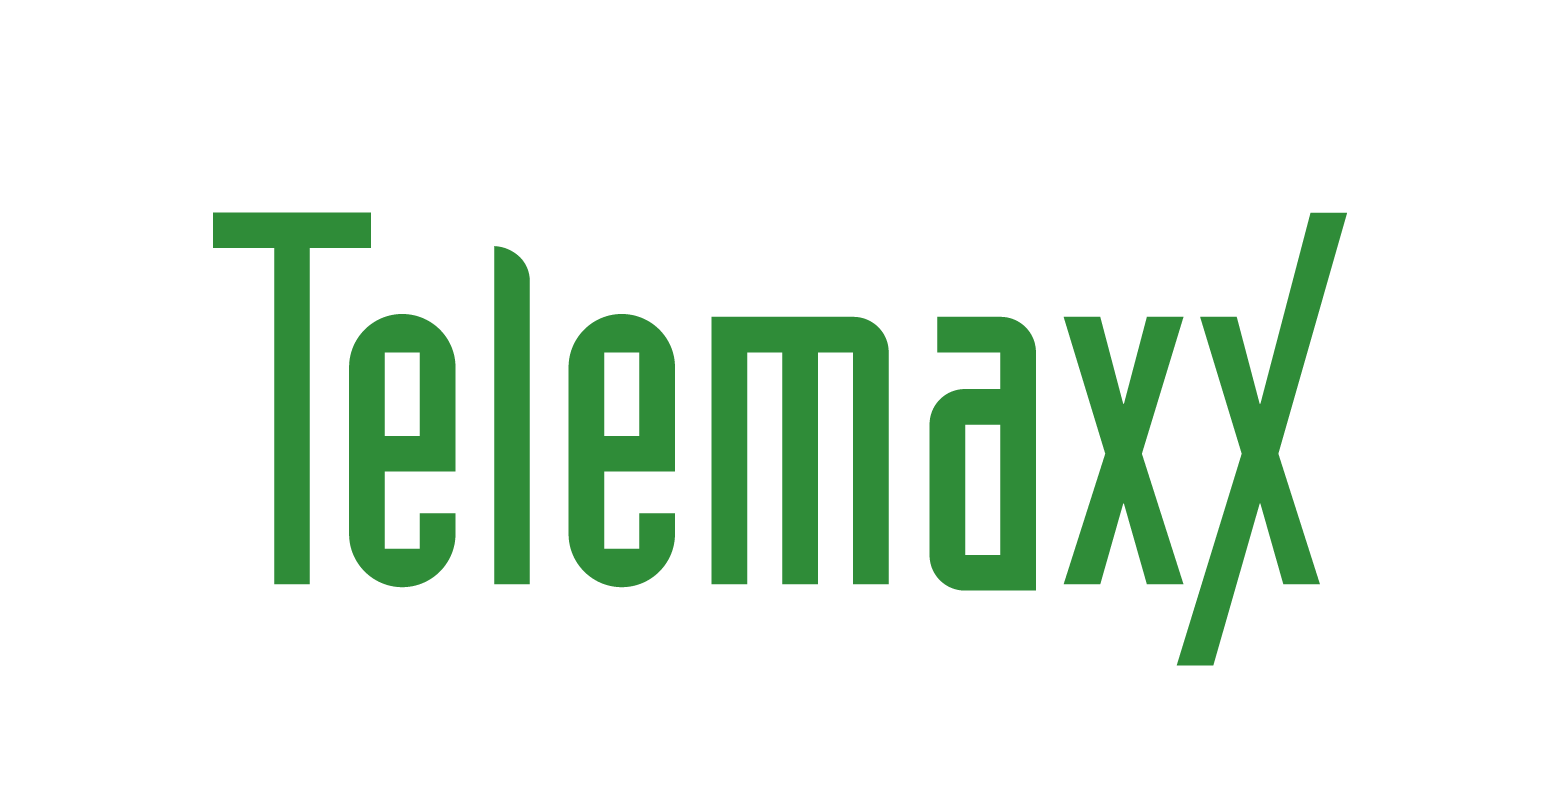 Provider logo for Telemaxx